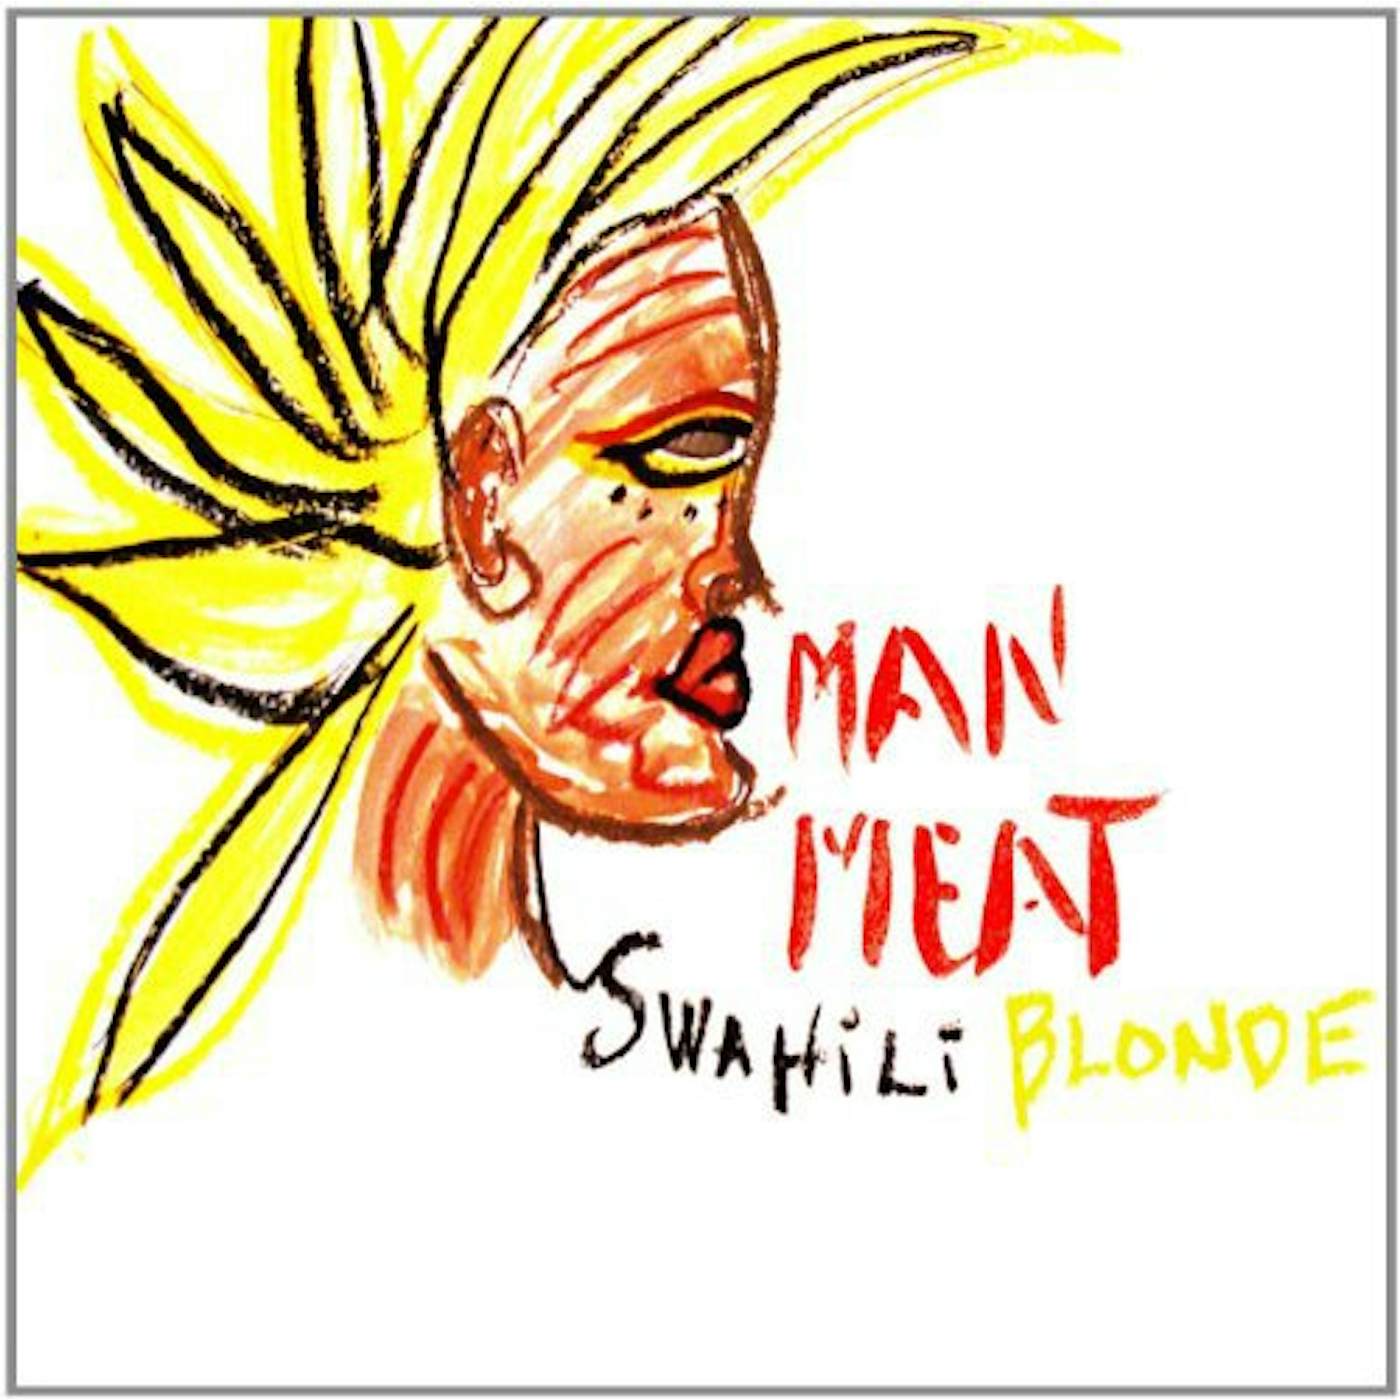 Swahili Blonde Man Meat Vinyl Record